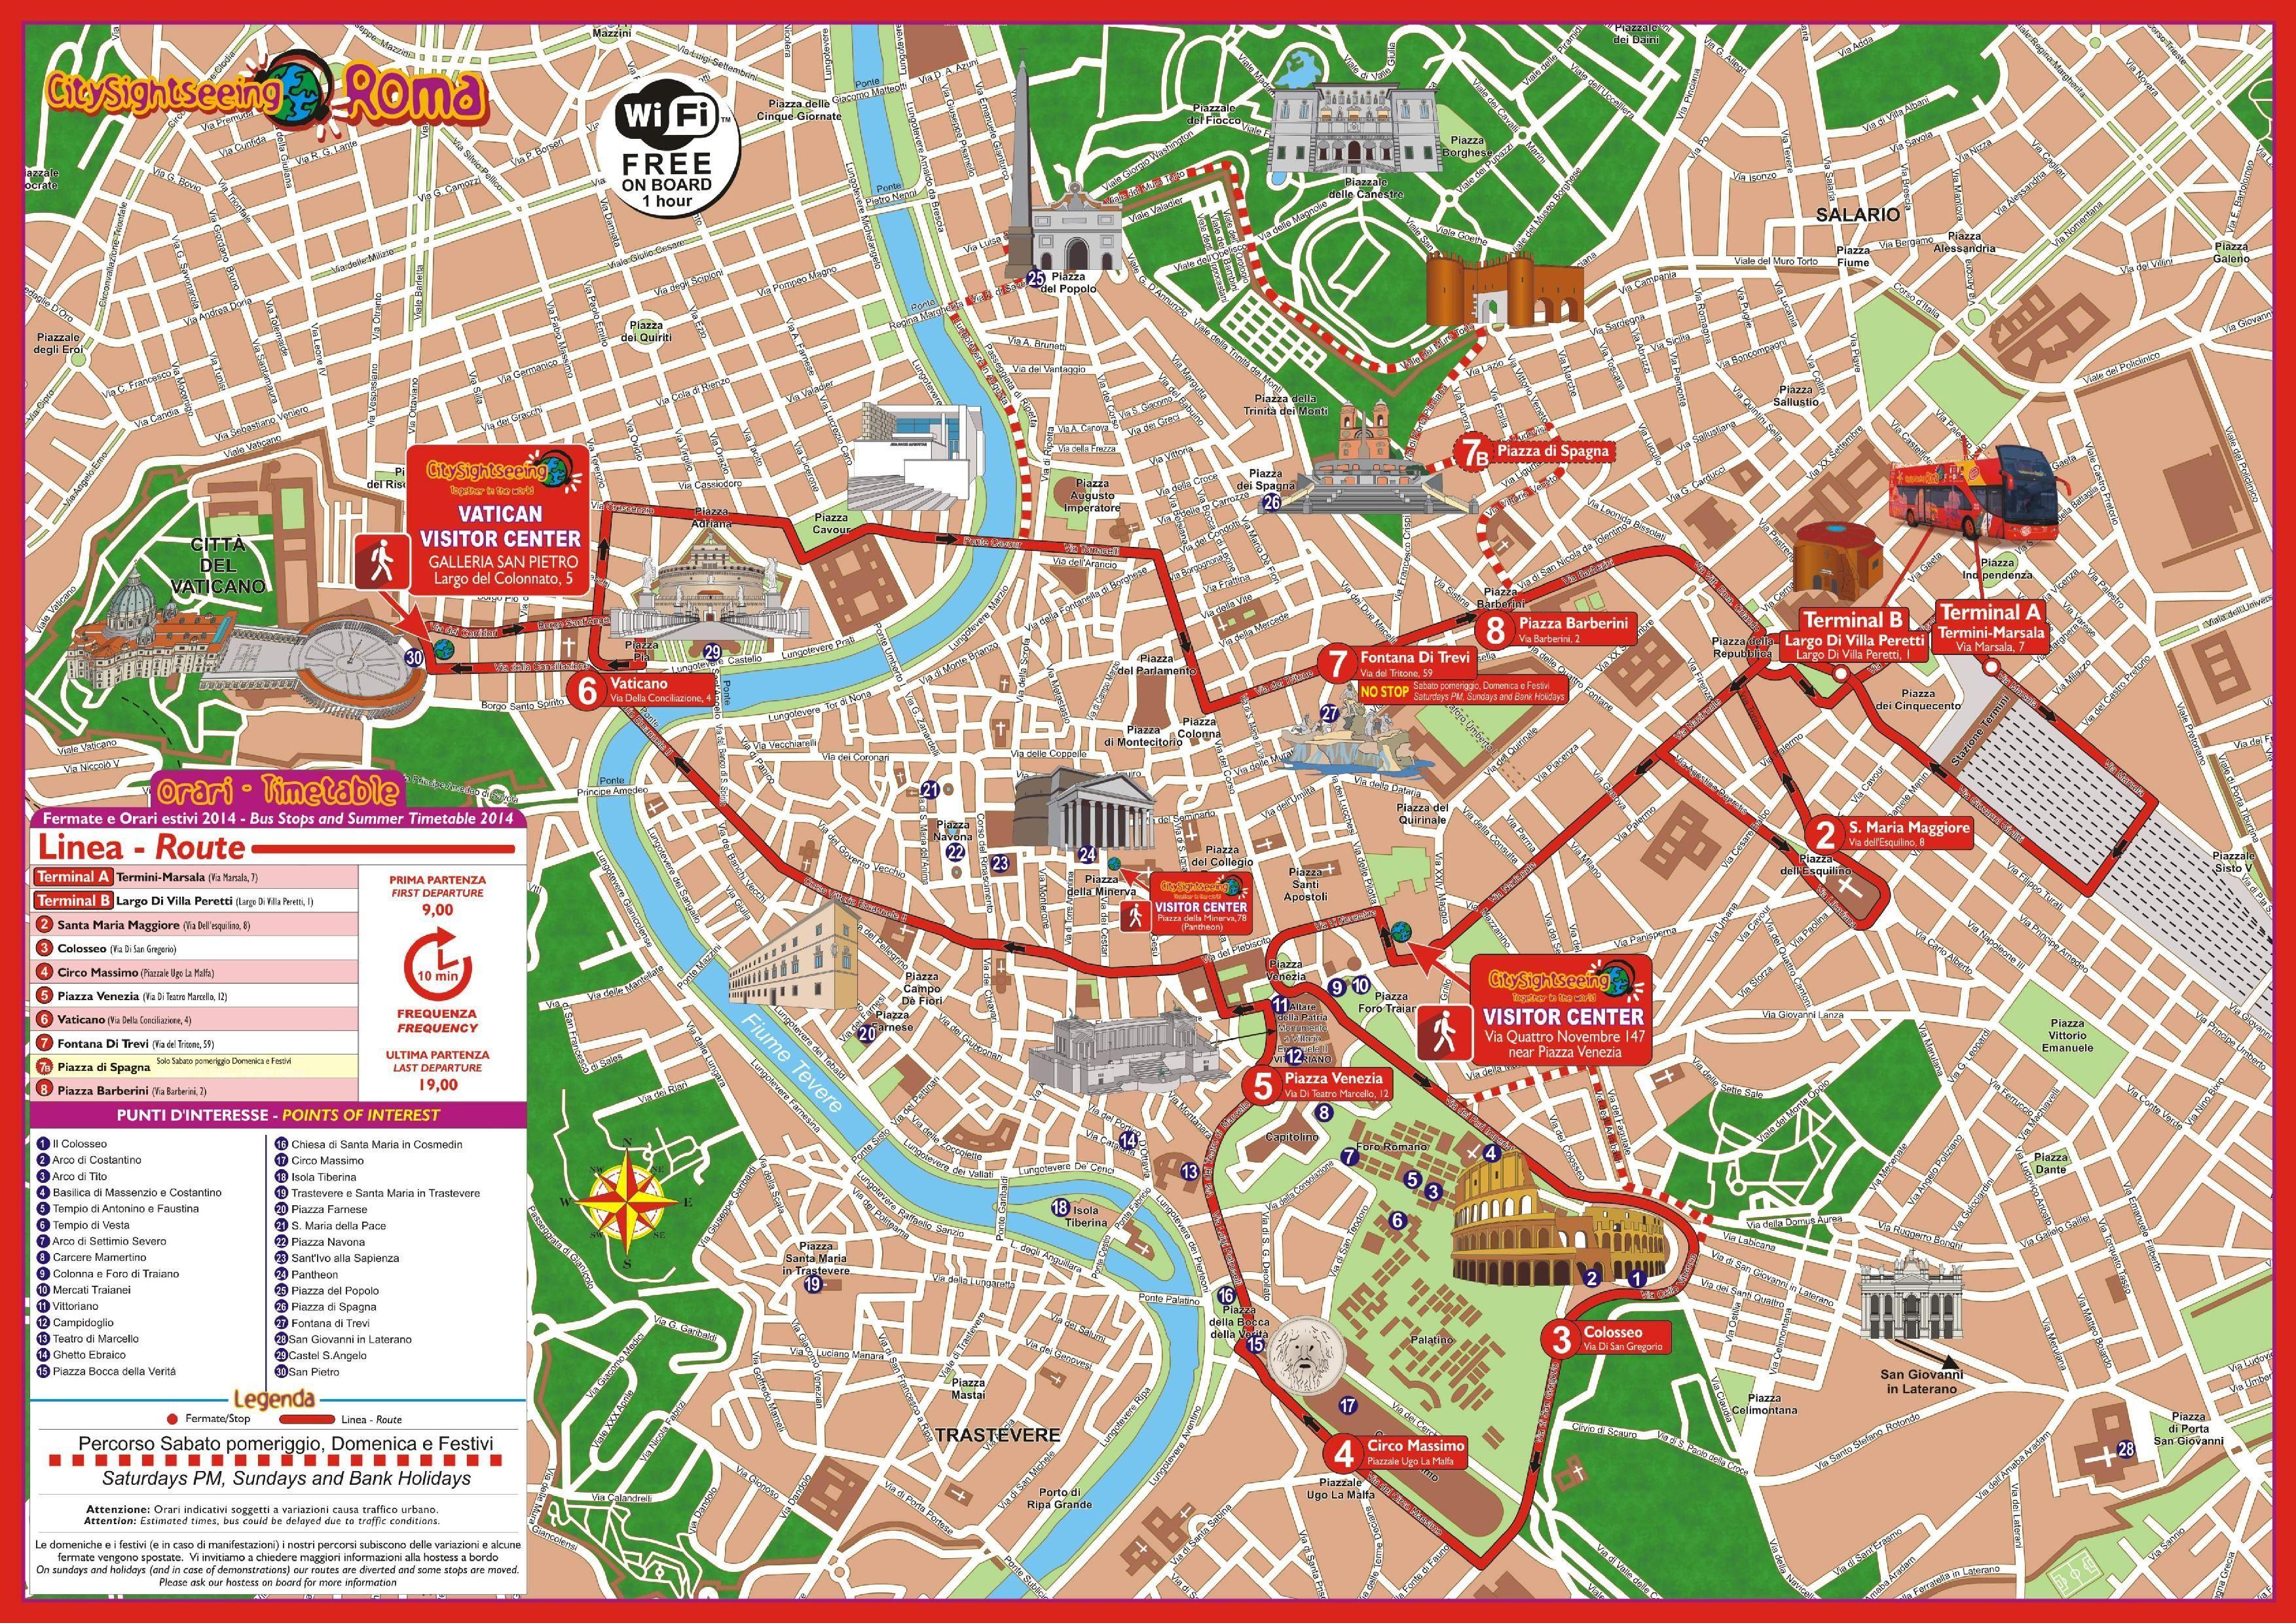 Rom sightseeing-bus Karte - Rom city sightseeing bus route map (Lazio